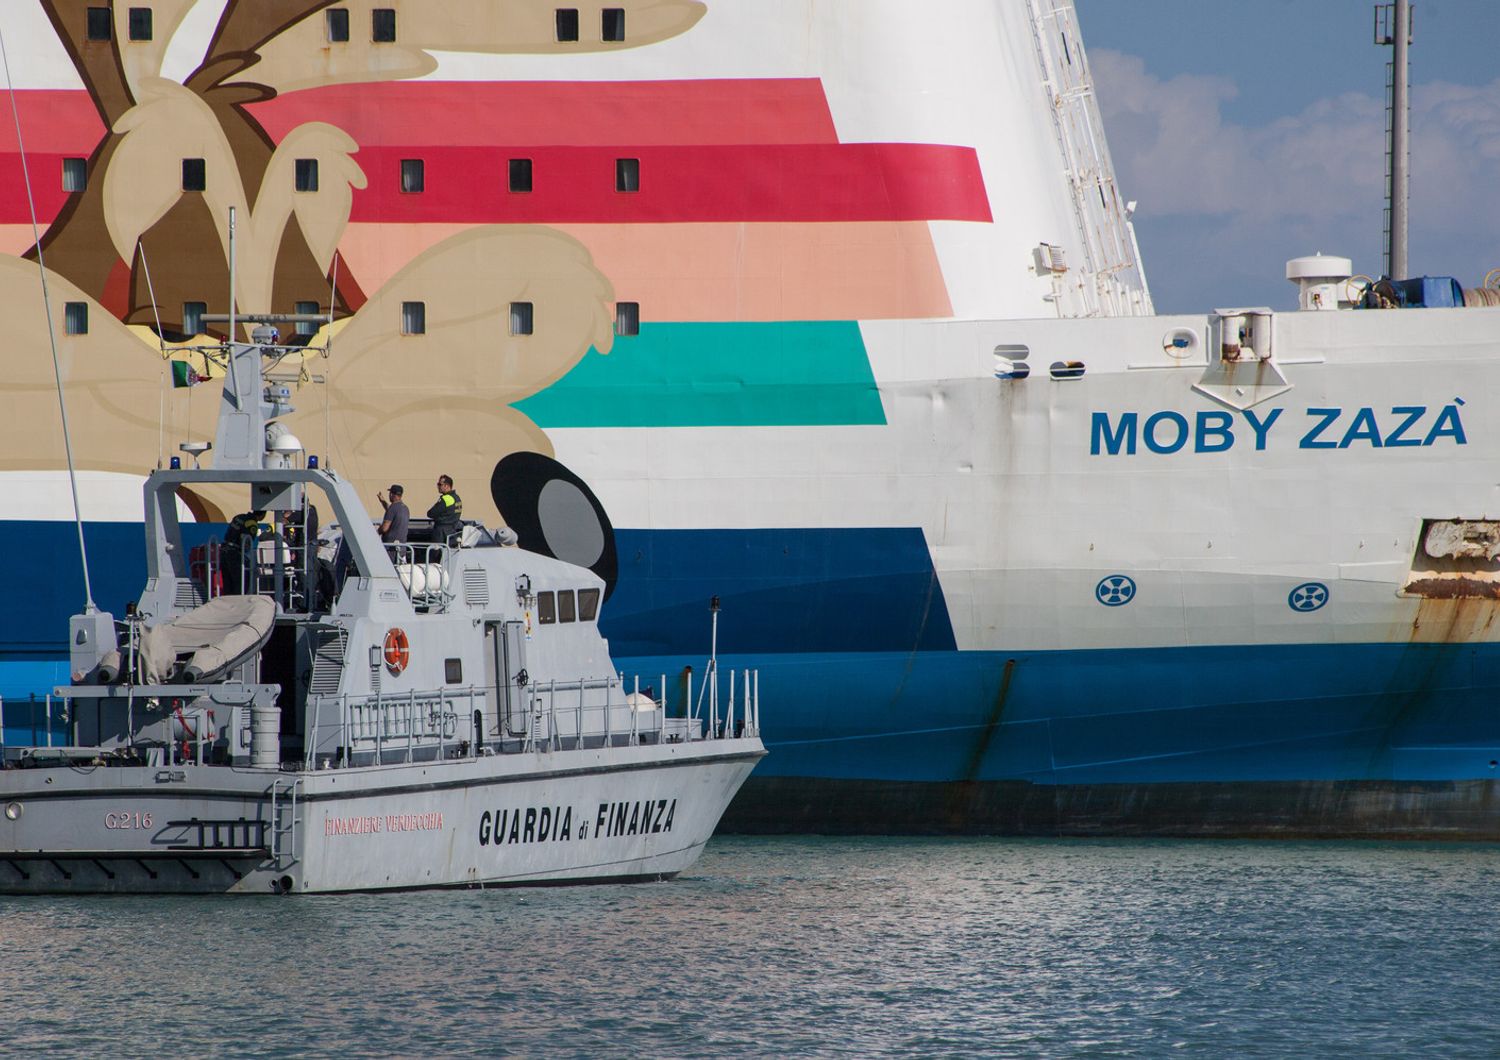 La nave quarantena Moby Zaza